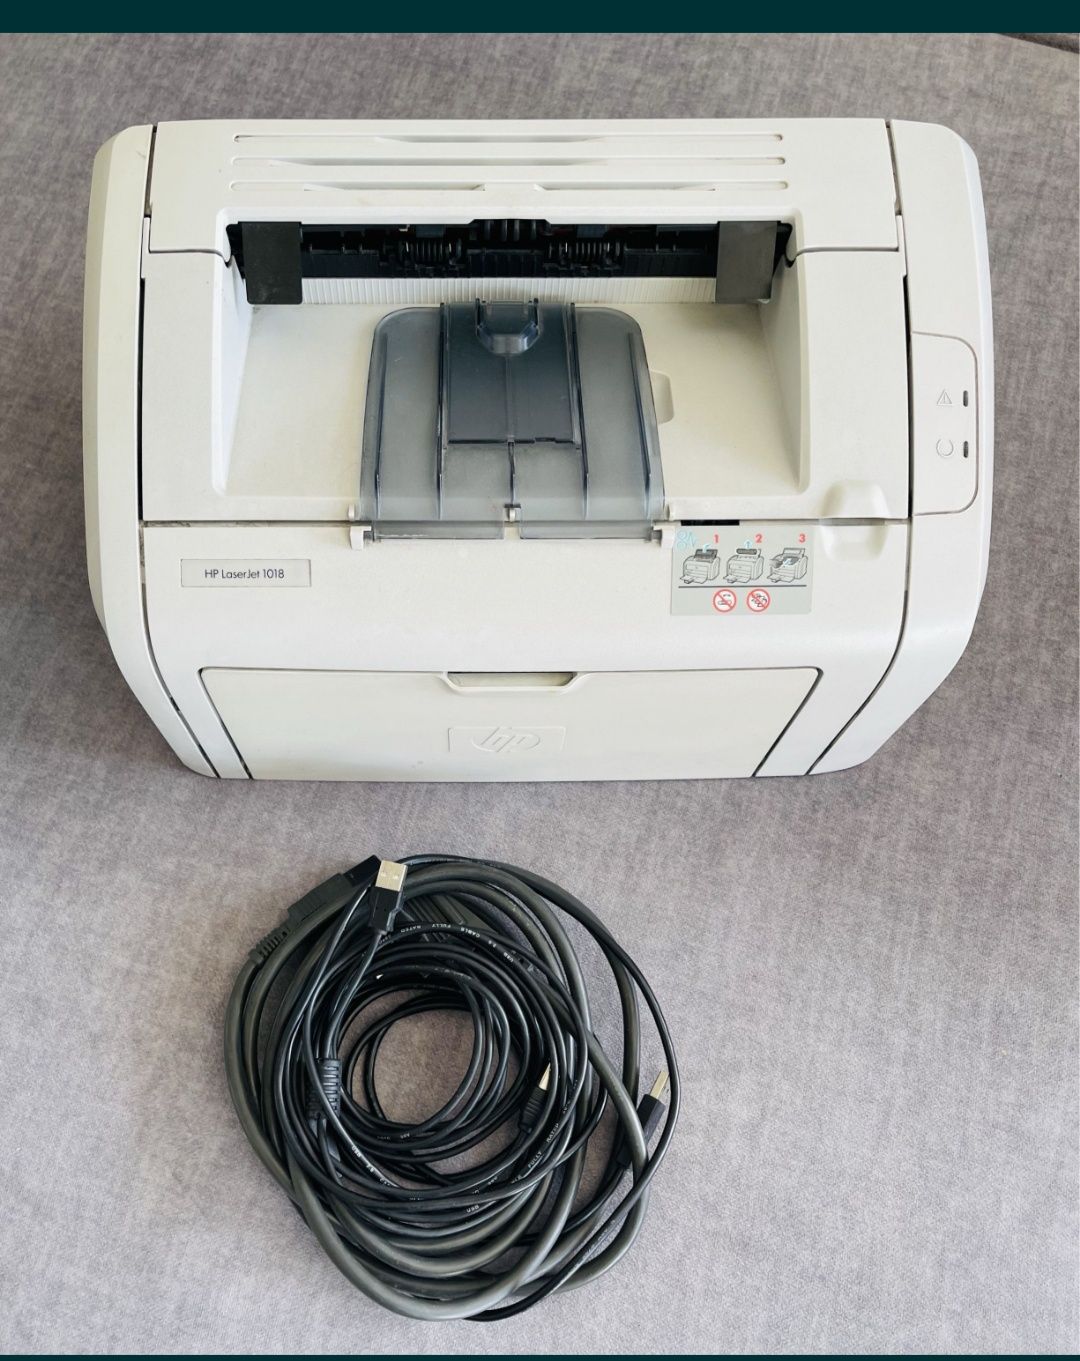 Лазерний принтер hp 1018, заправлений